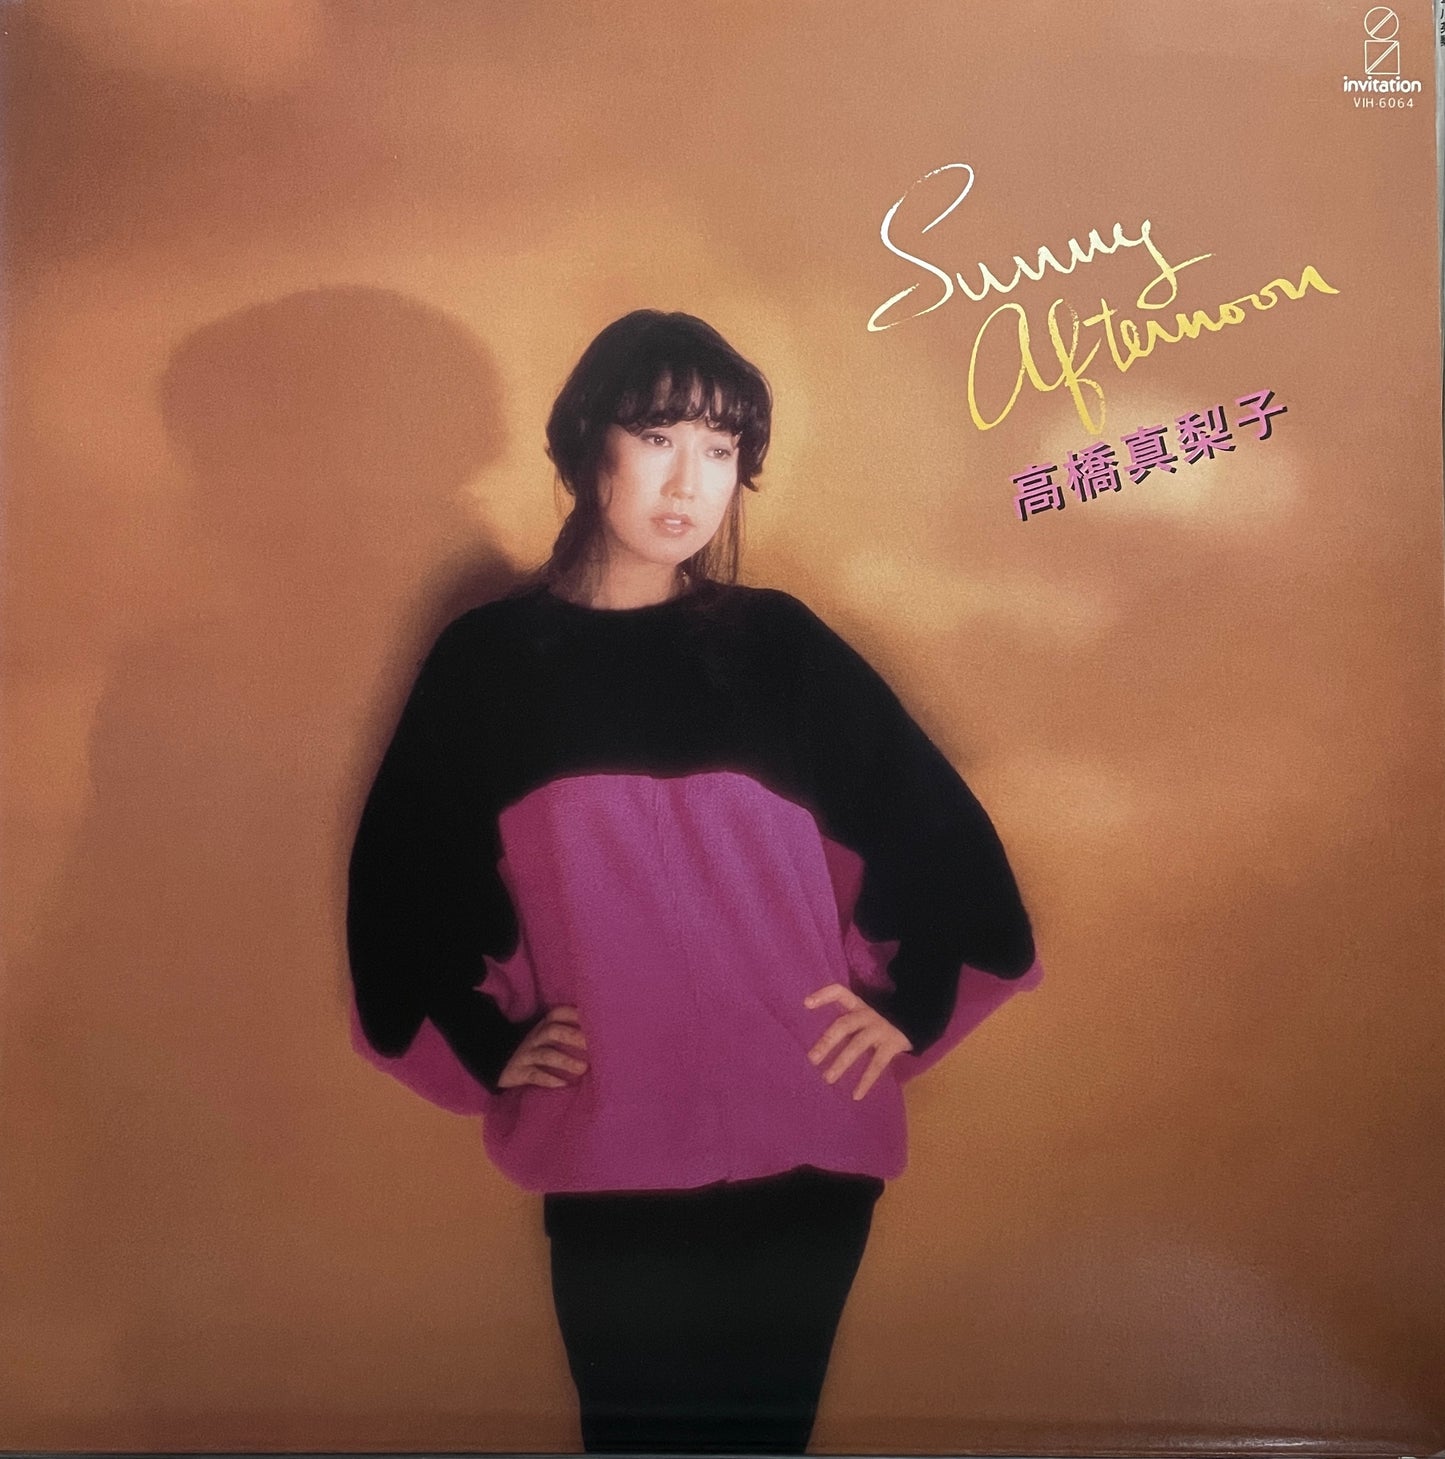 Mariko Takahashi "Sunny Afternoon" (1980)